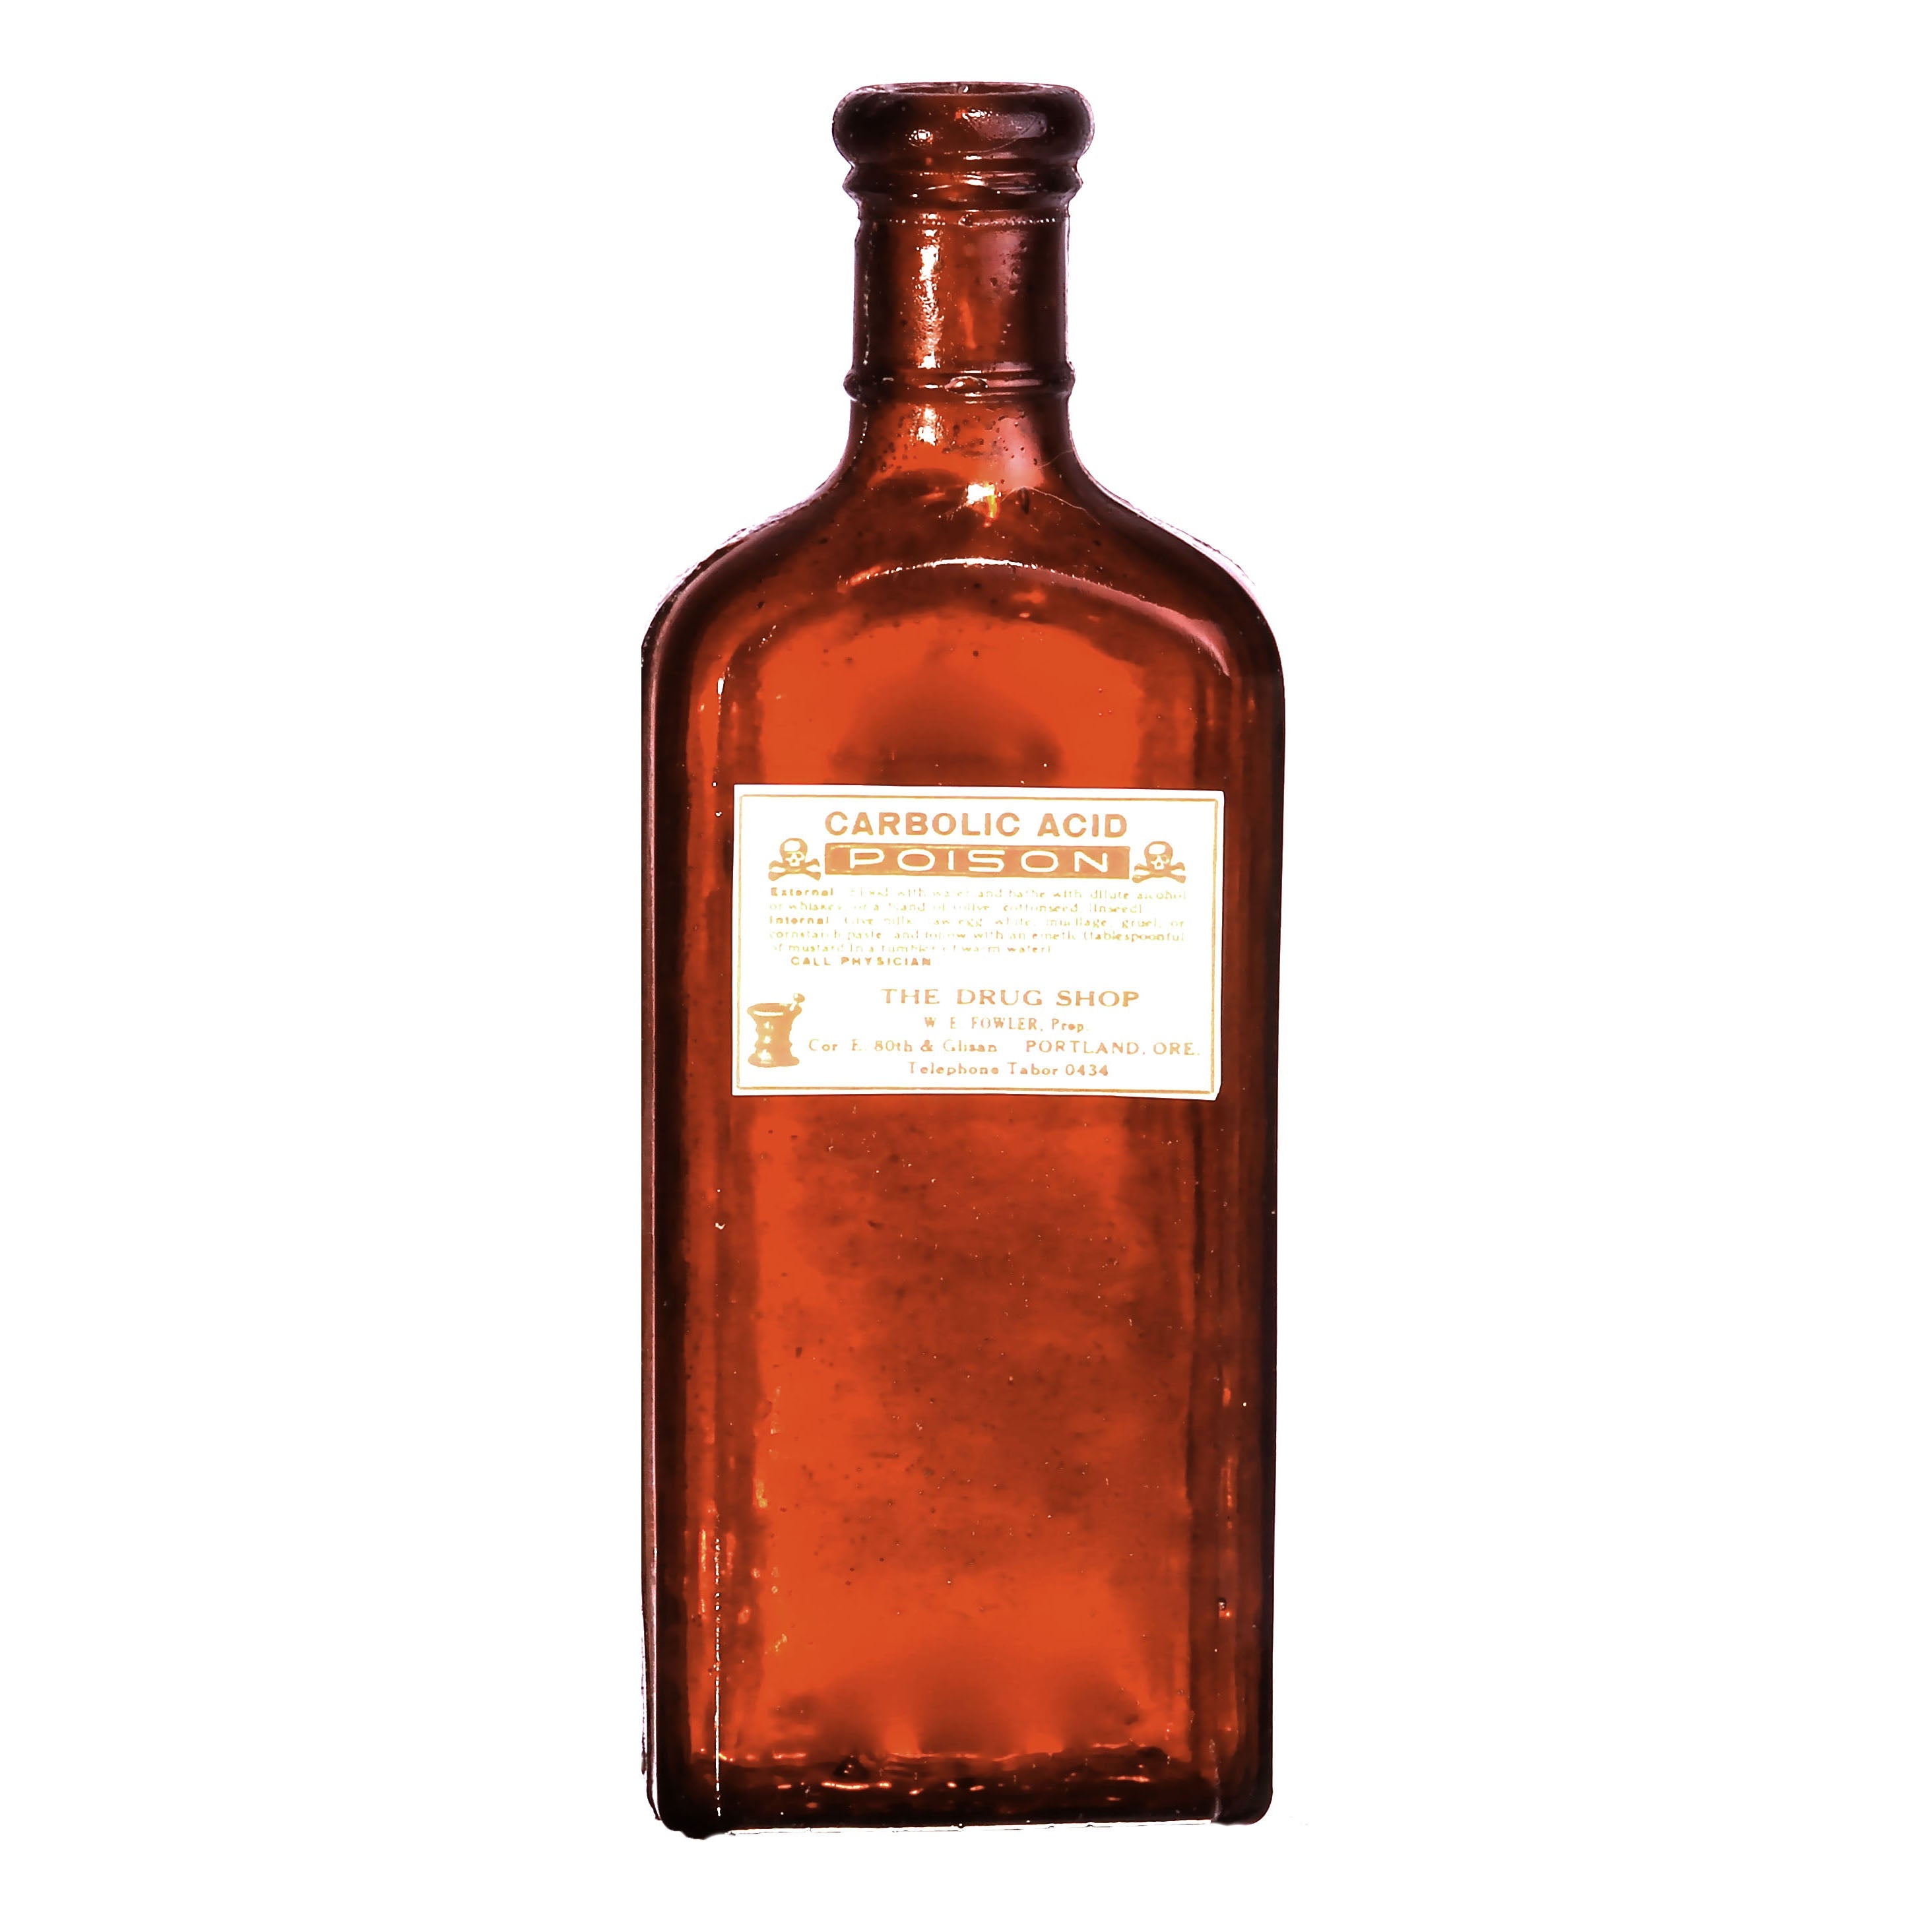 SMASHProps Breakaway Large Medicine Bottle Prop - AMBER BROWN translucent - Amber Brown Translucent